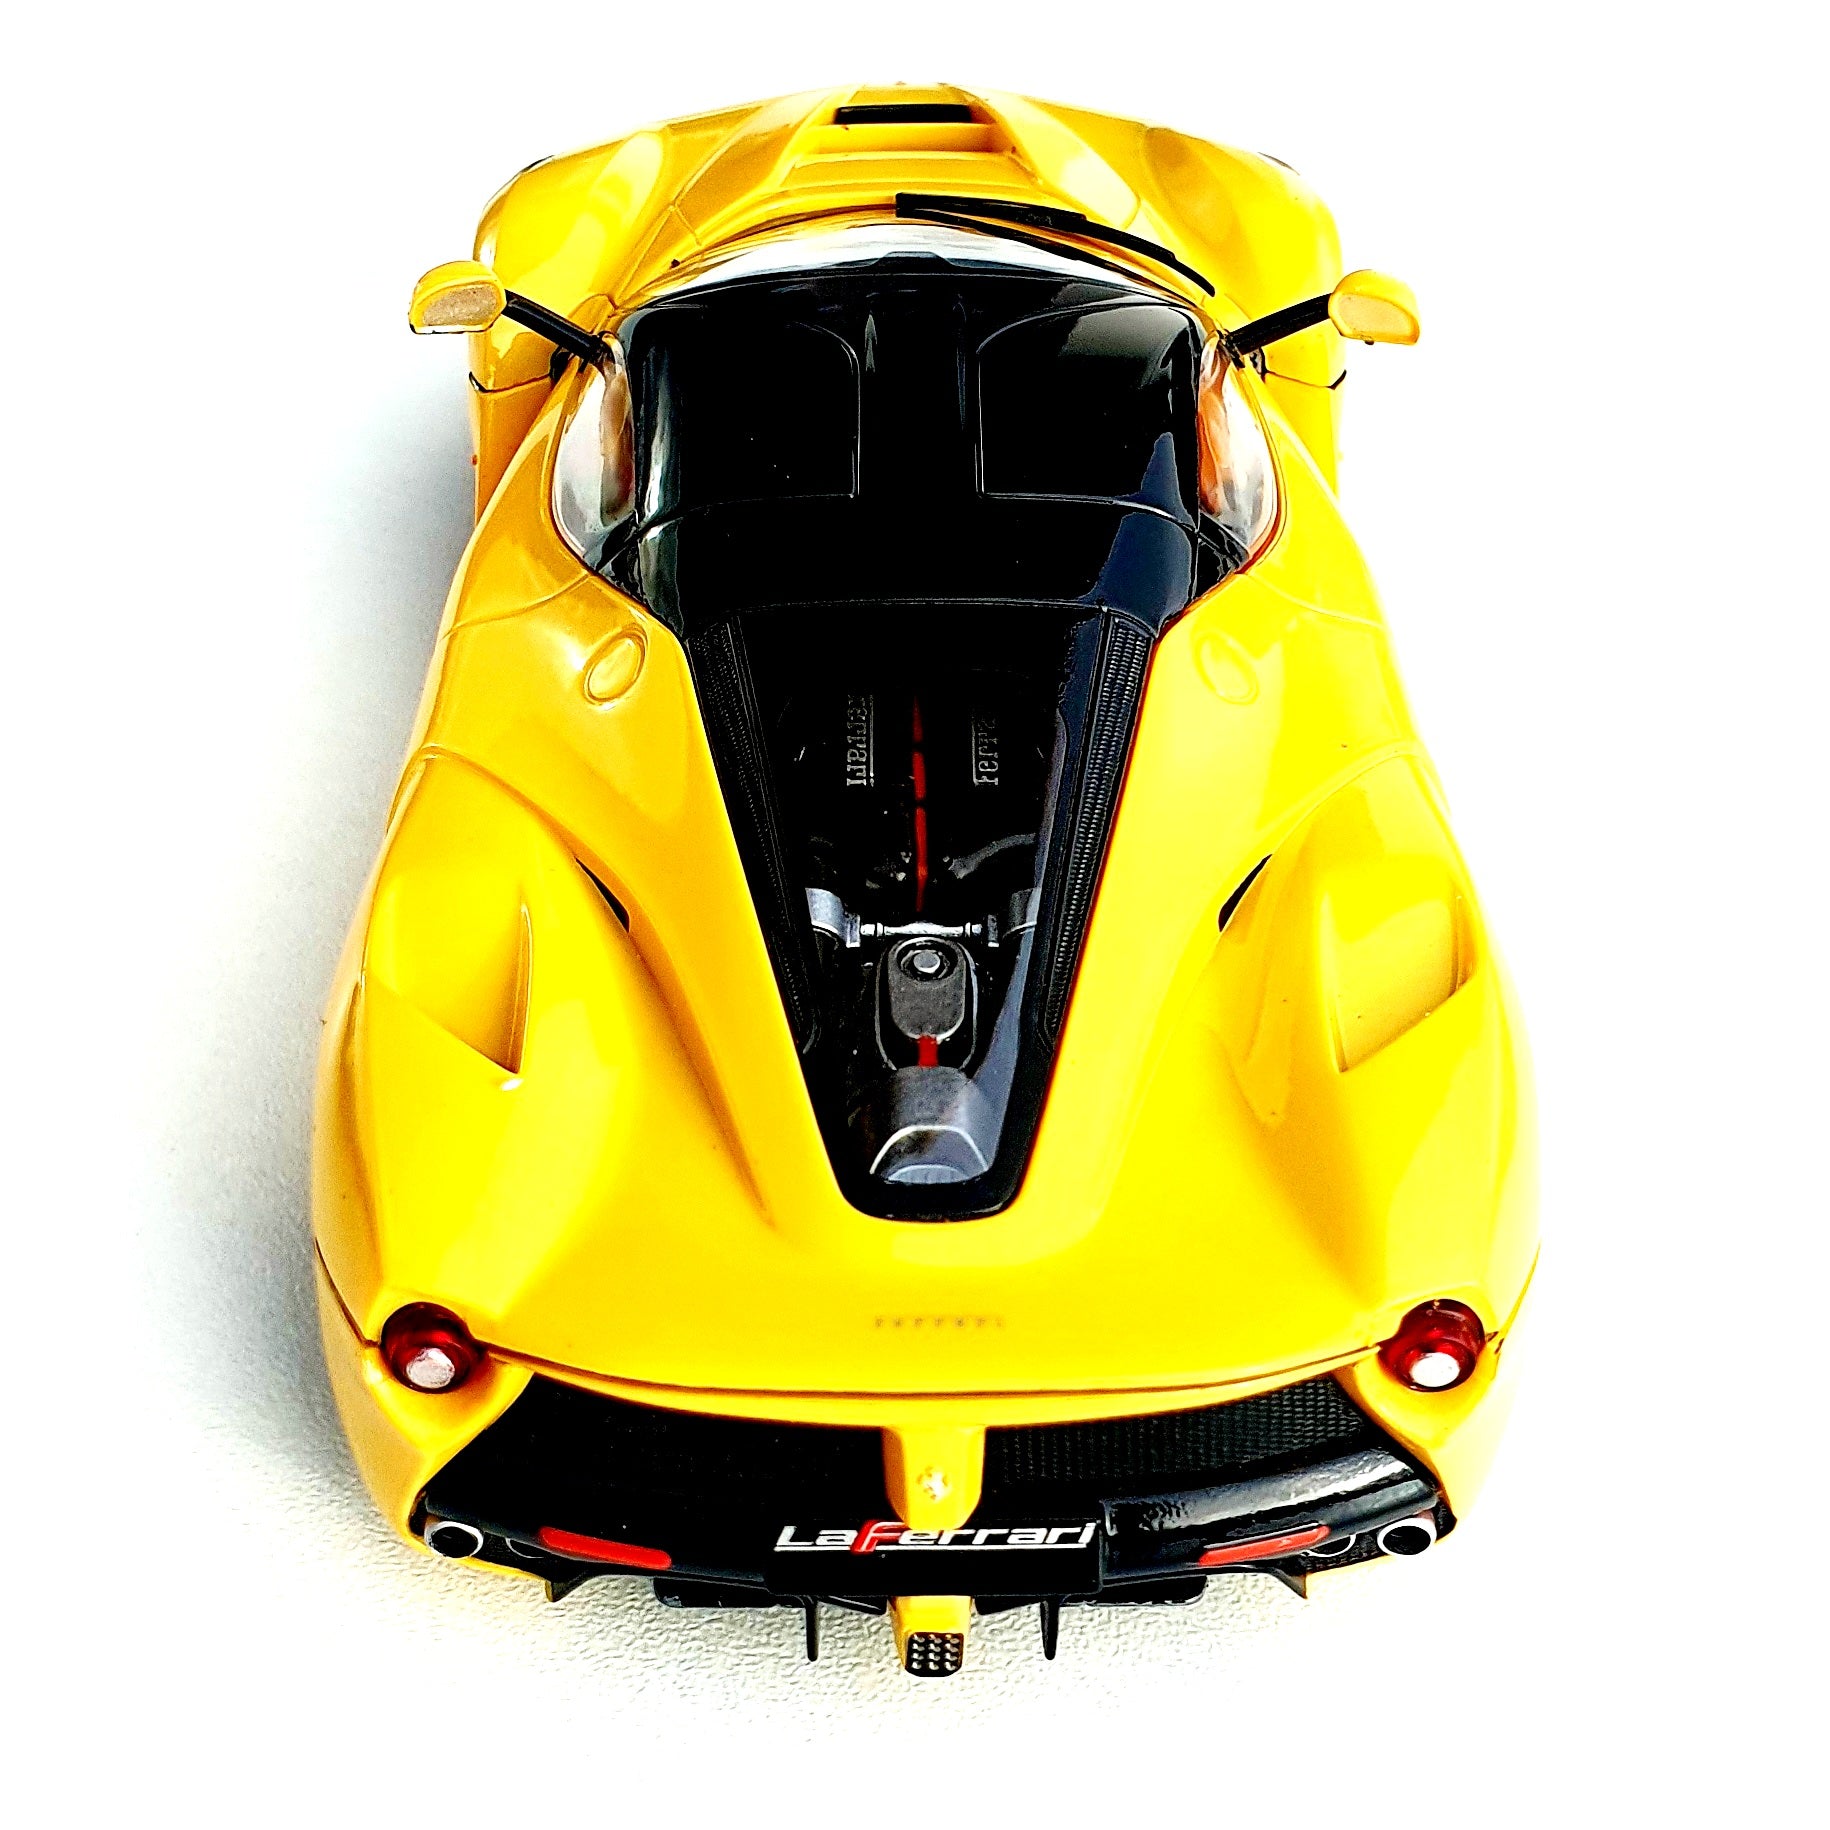 Carrera Digital 132 gelb Auto Ferrari